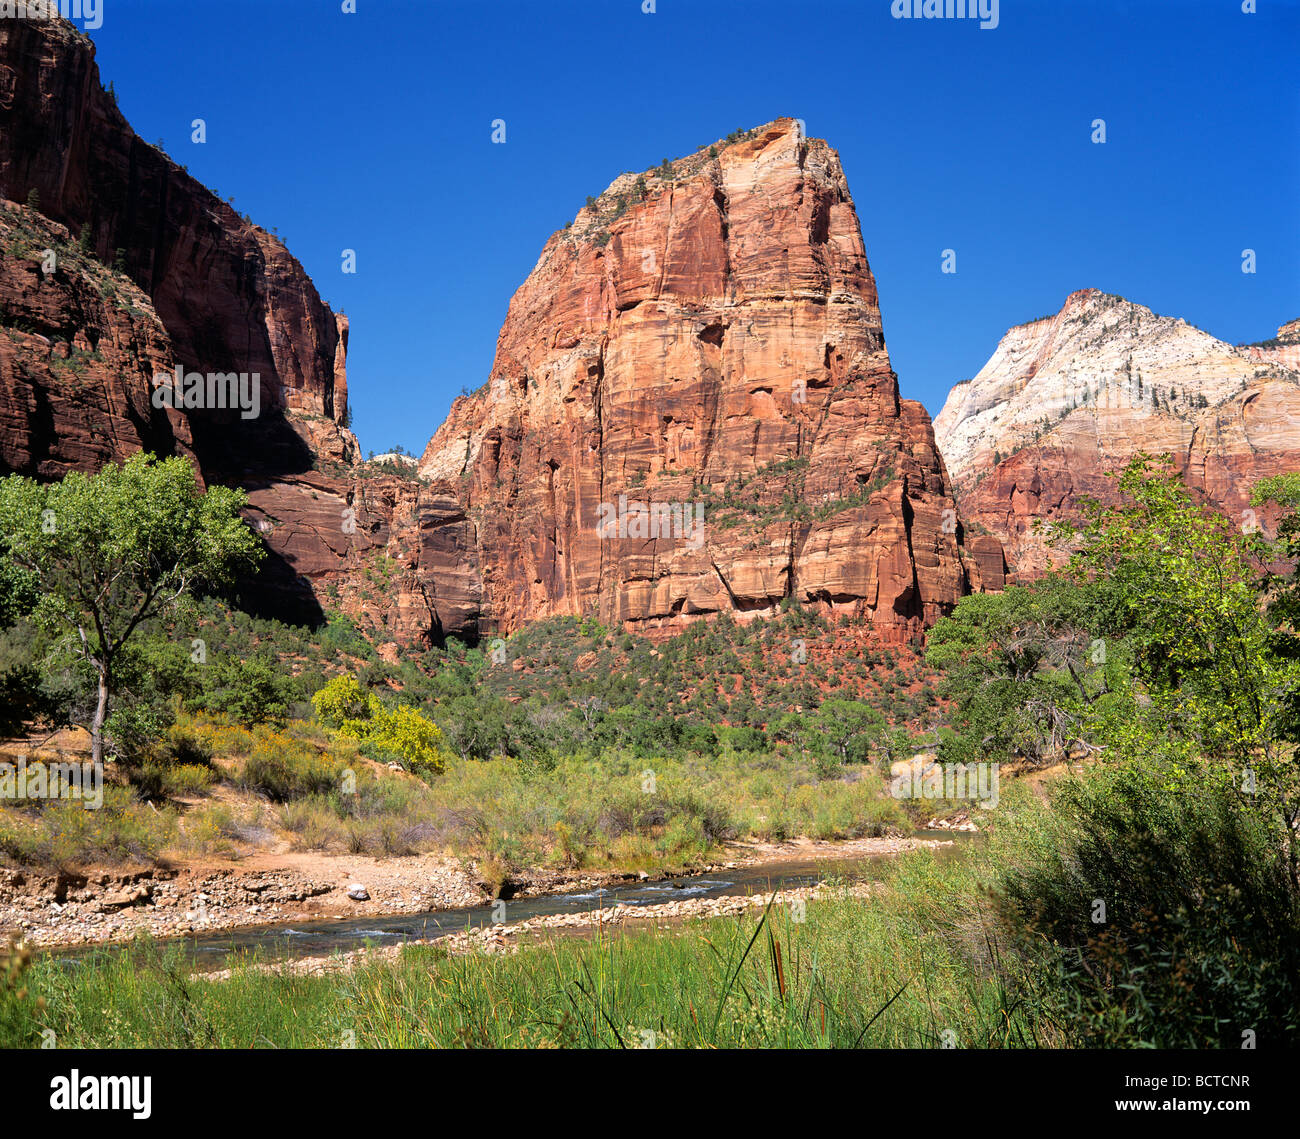 Canyon de Chelly National Monument, rock formations, Arizona, USA Stock Photo